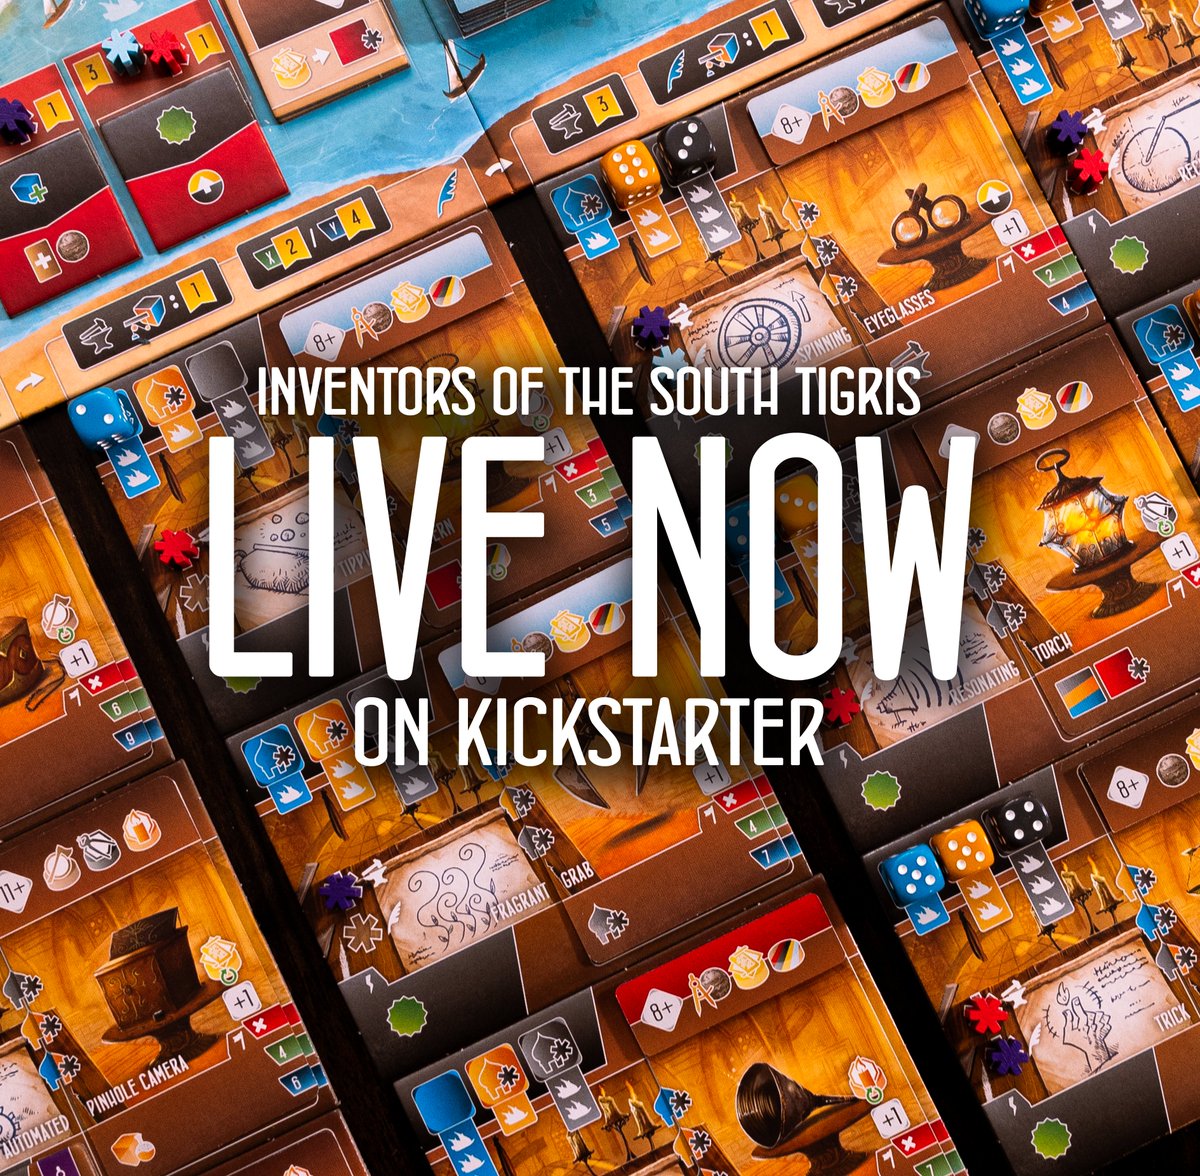 Inventors is live now on Kickstarter! kickstarter.com/projects/shem/…